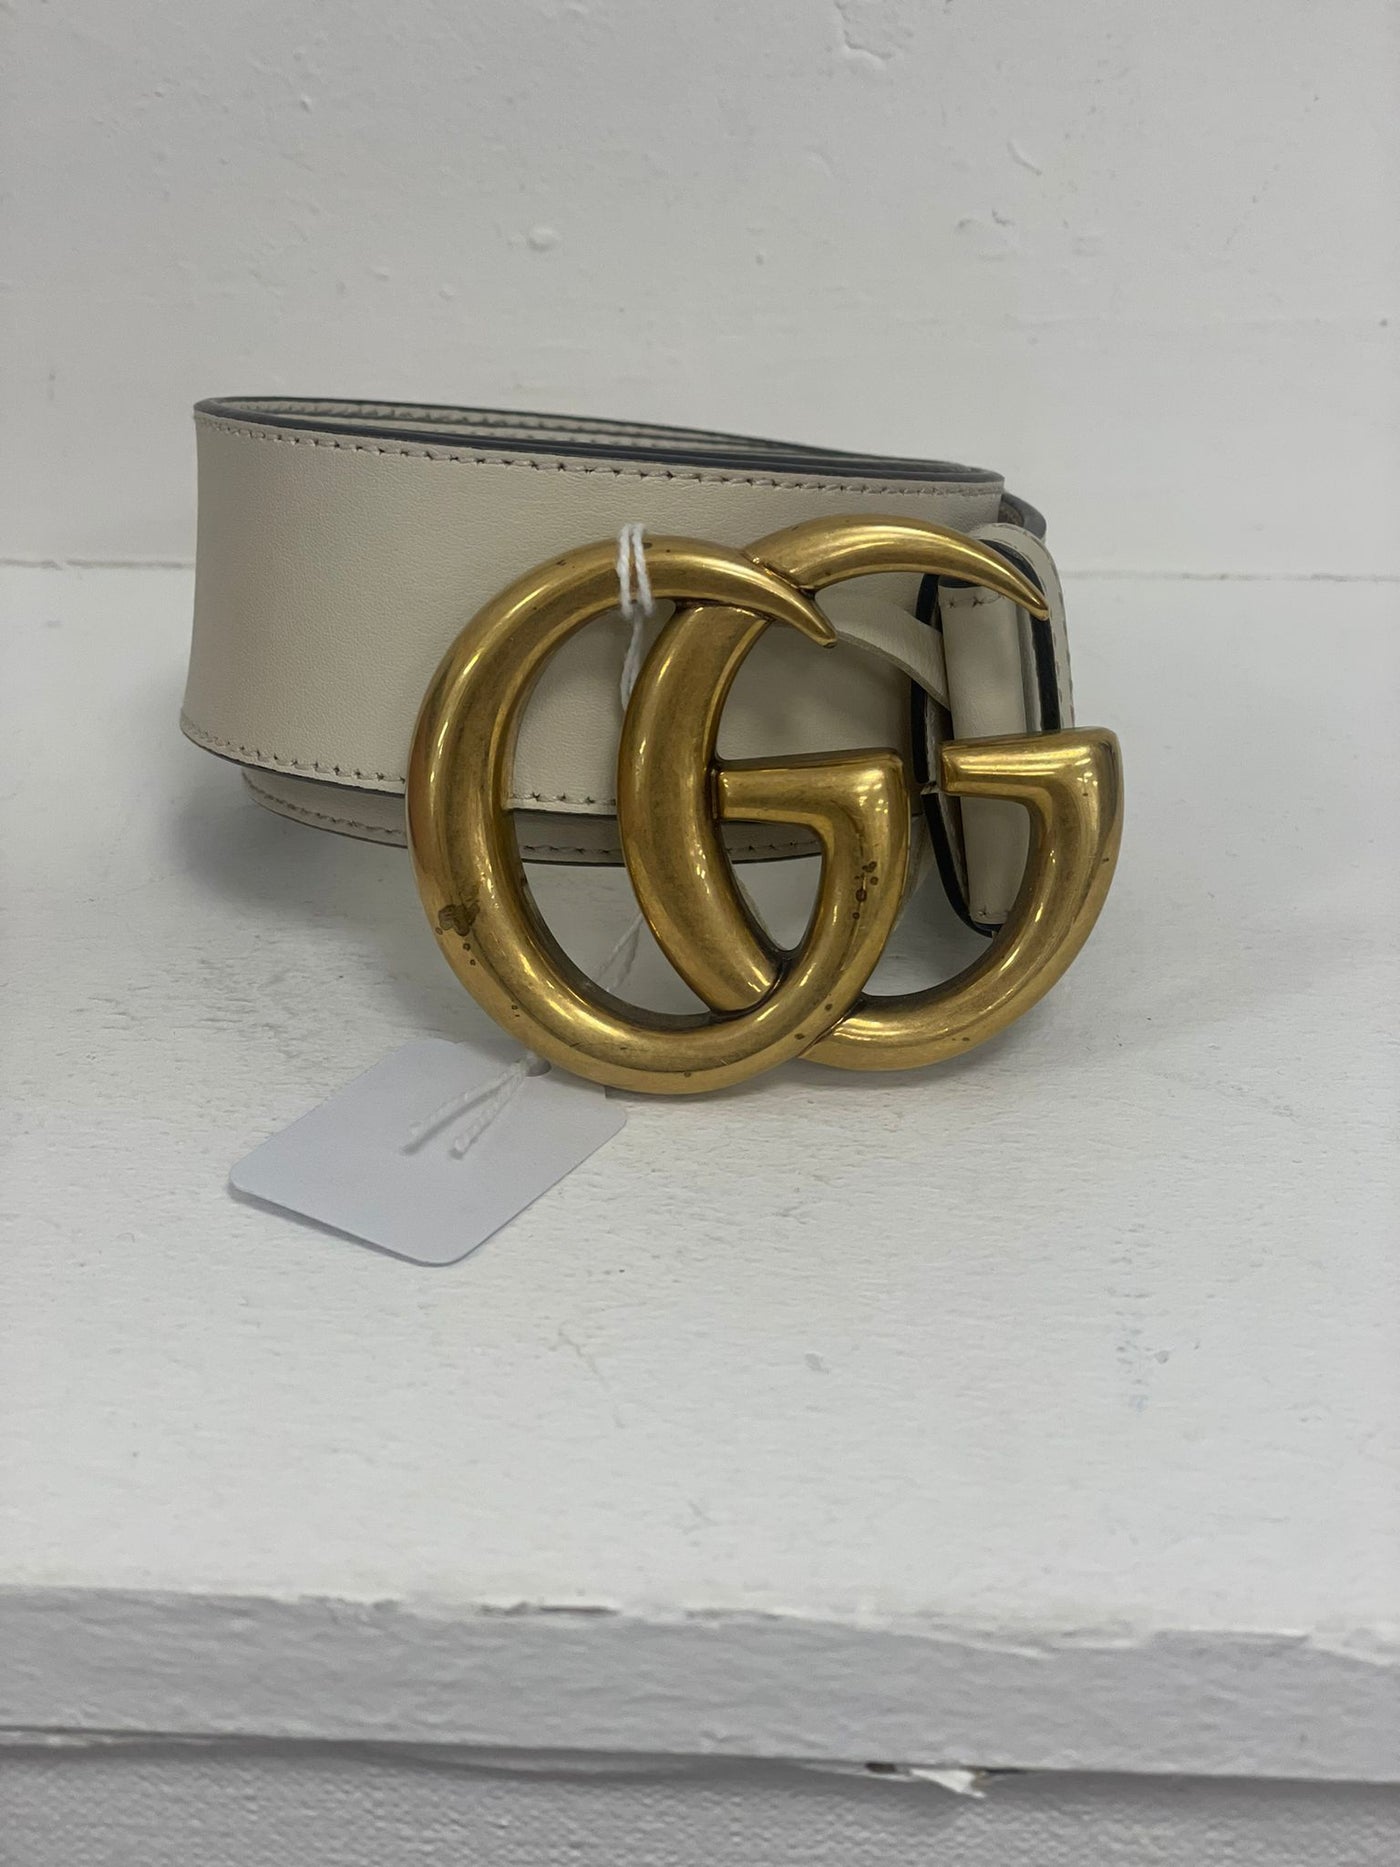 Gucci GG logo belt cream